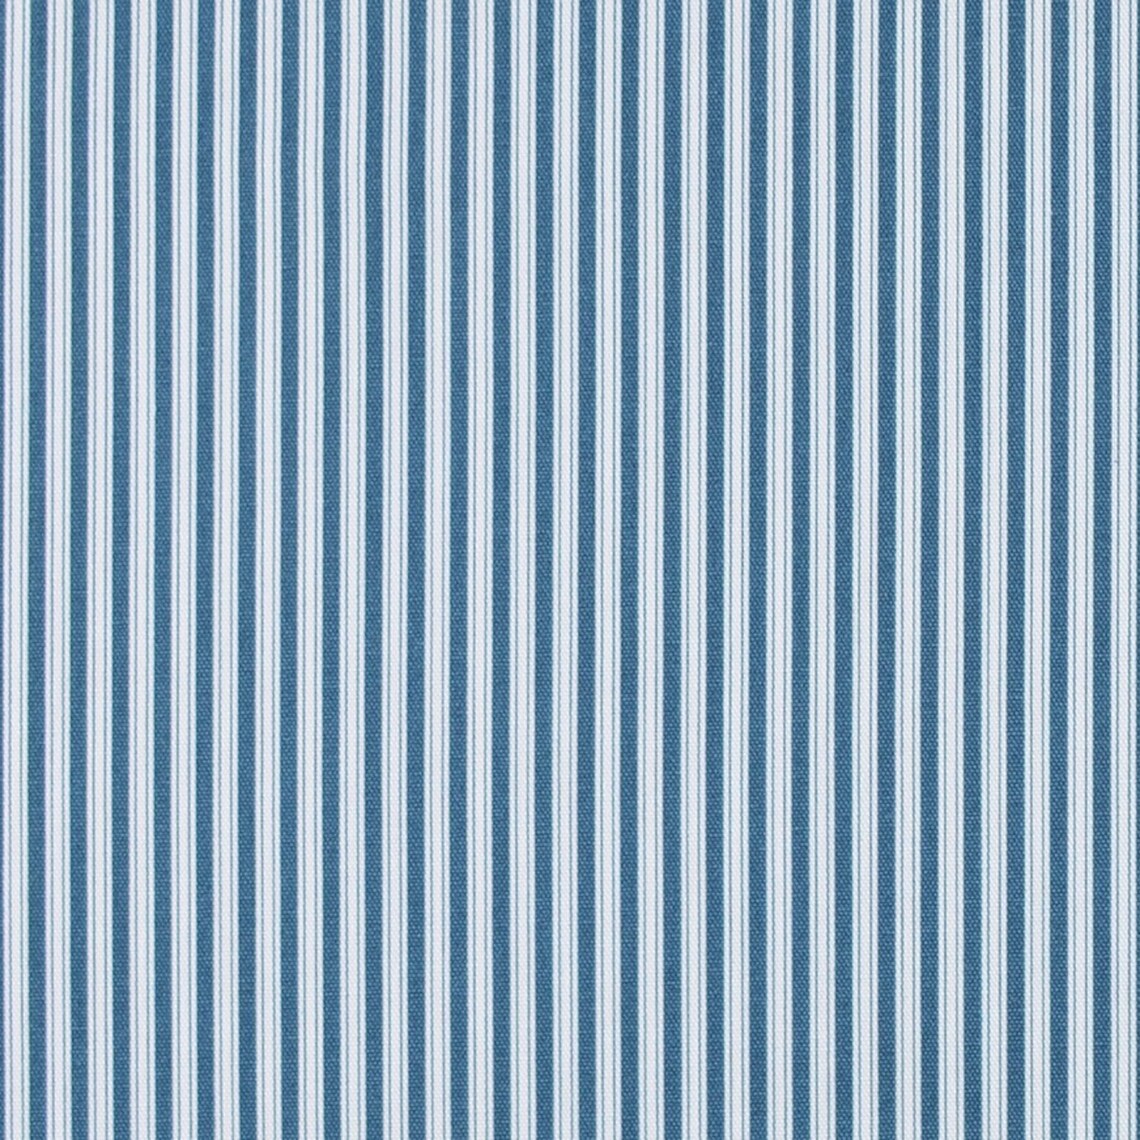 pillow sham in Polo Navy Blue Stripe on White